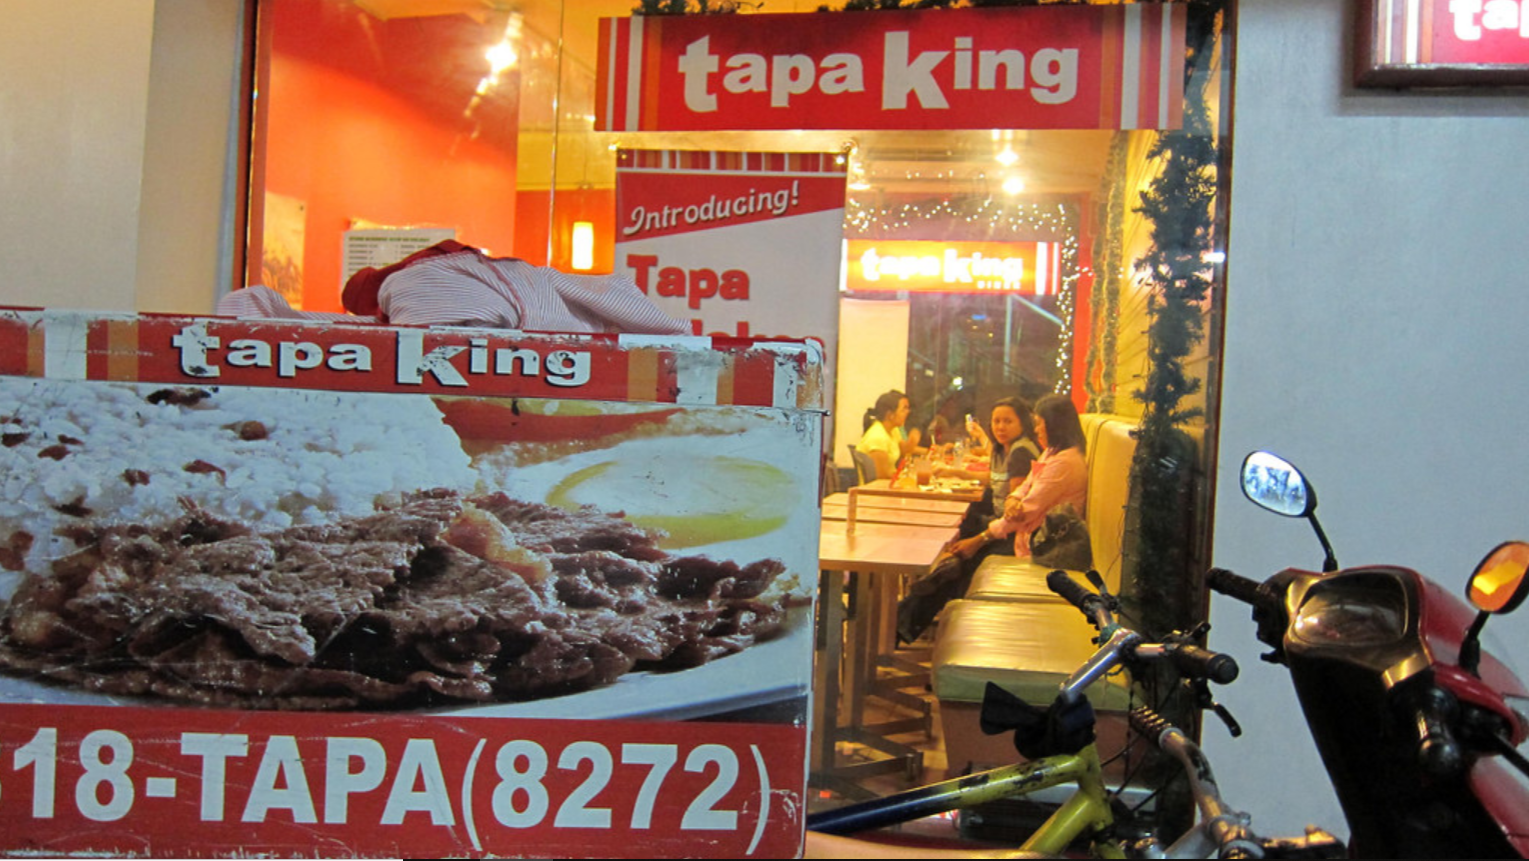 Franchising Your Own Tapa King Restaurant